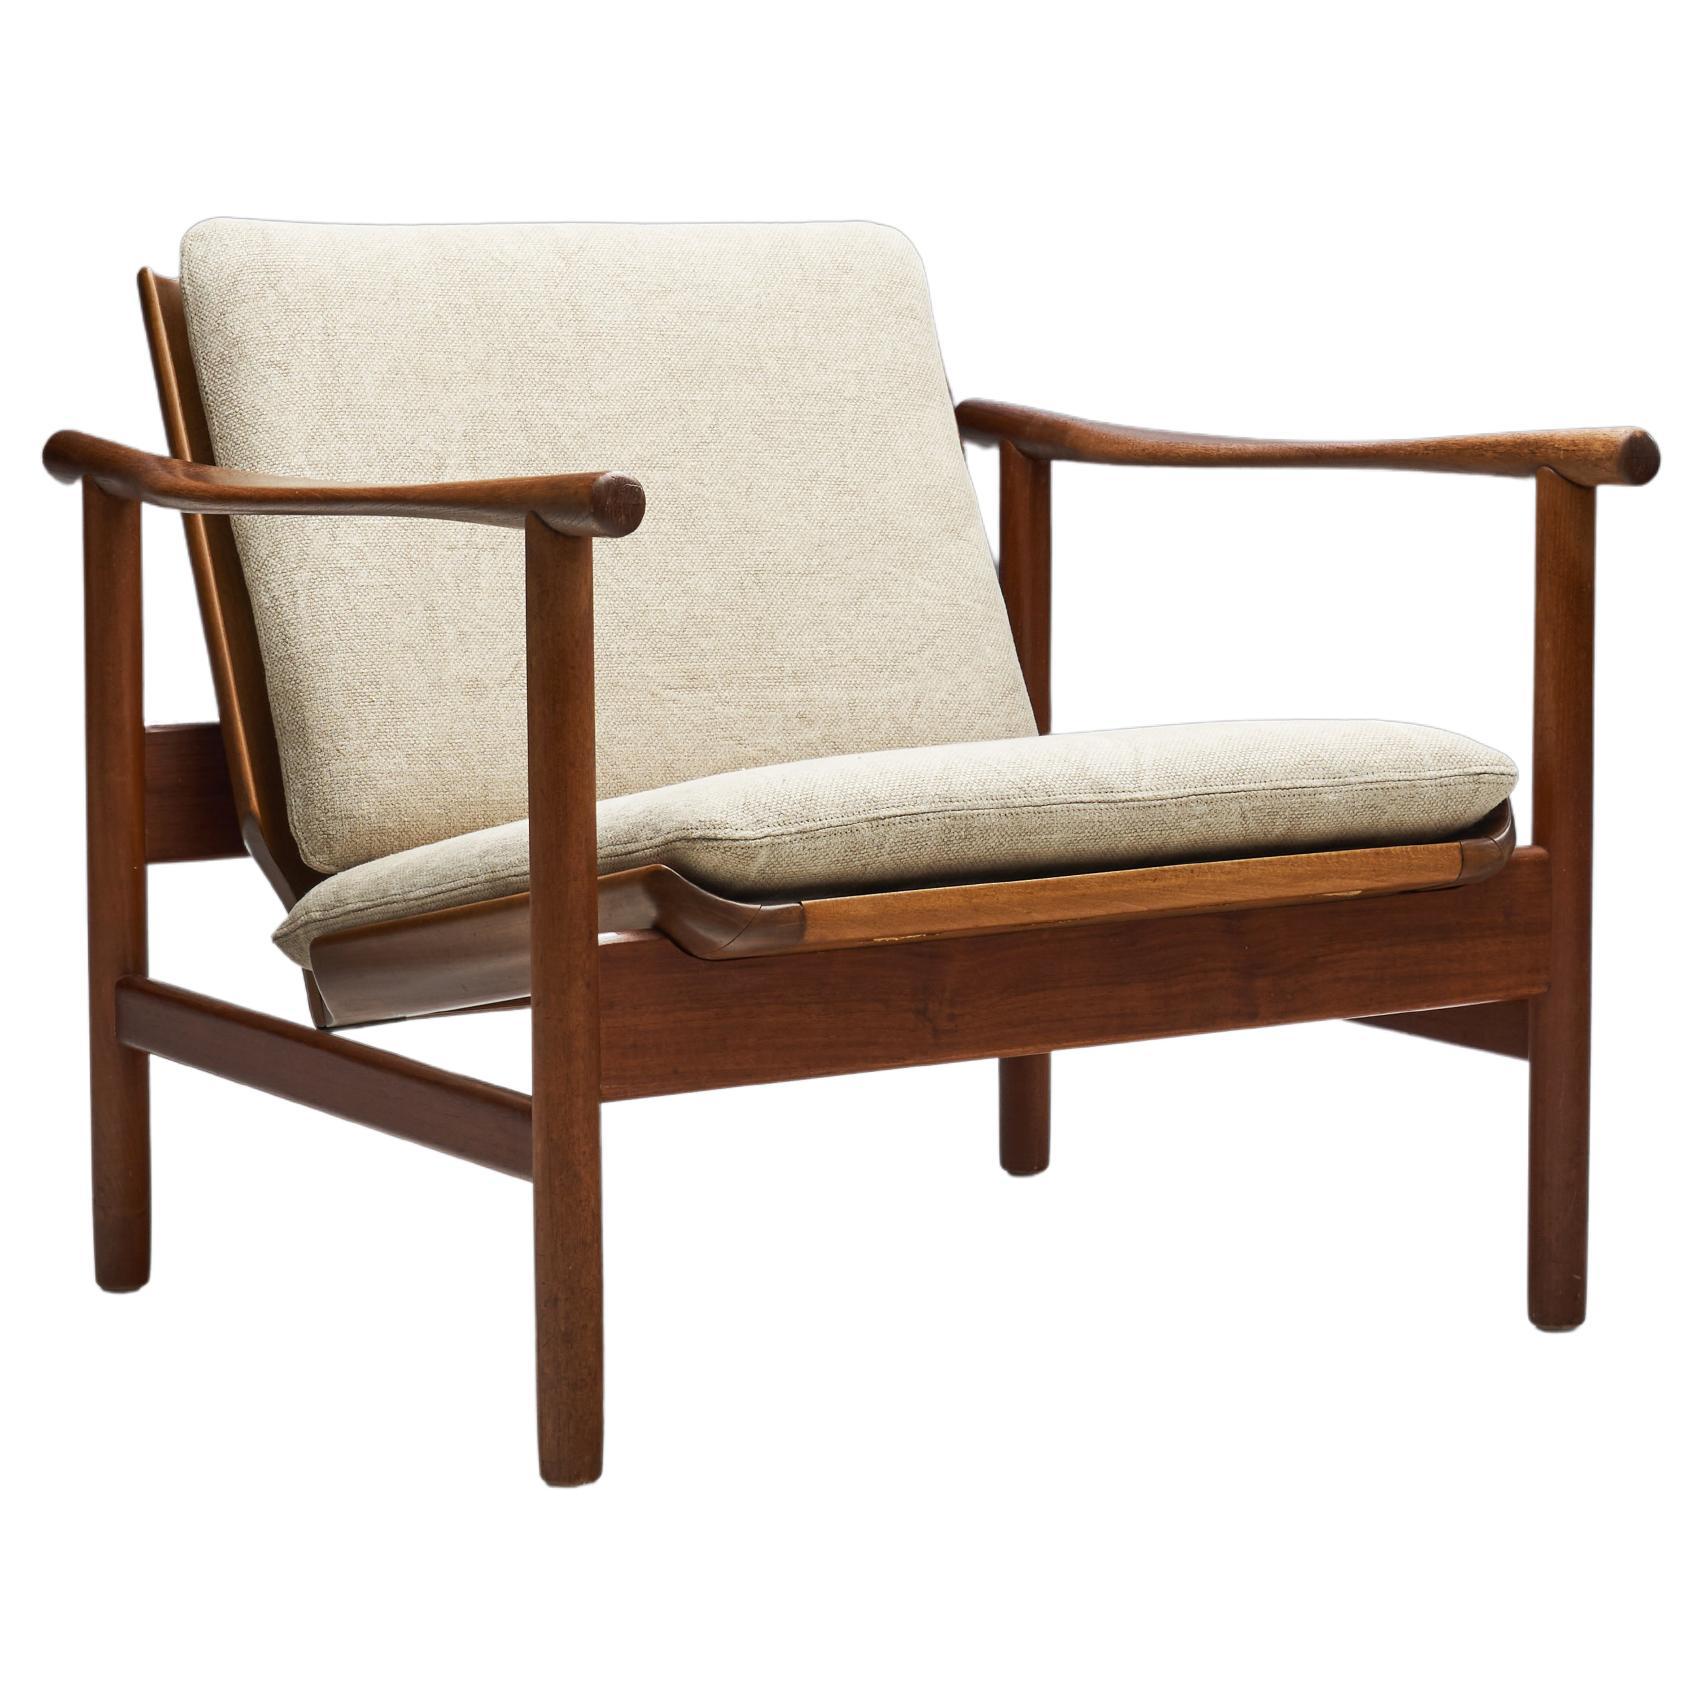 Solid Teak Danish Lounge Chair, Denmark 1950s For Sale